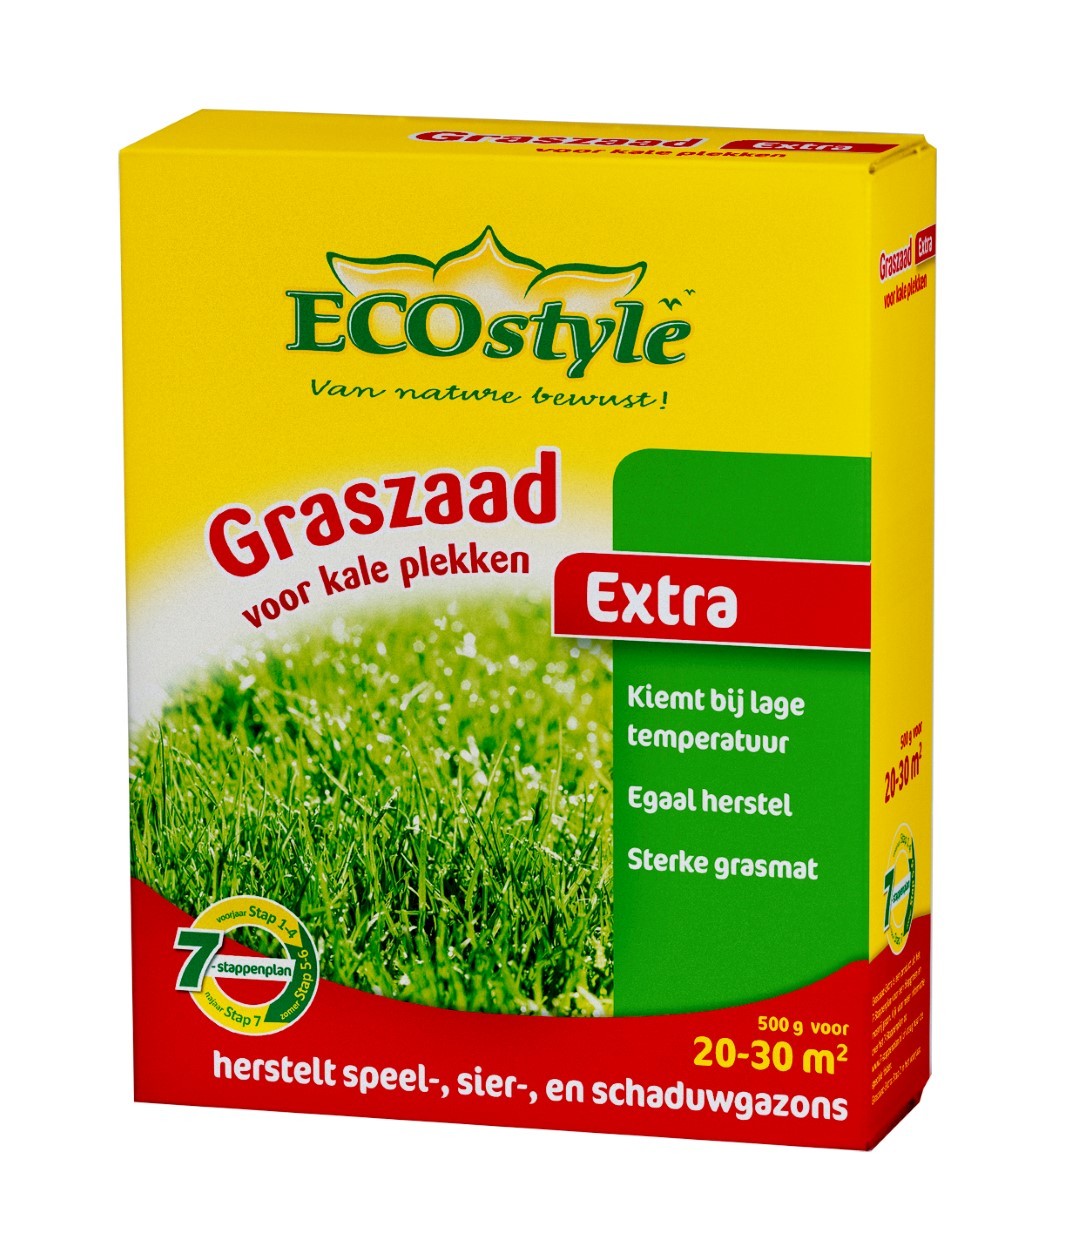 Graszaad Extra 500 g